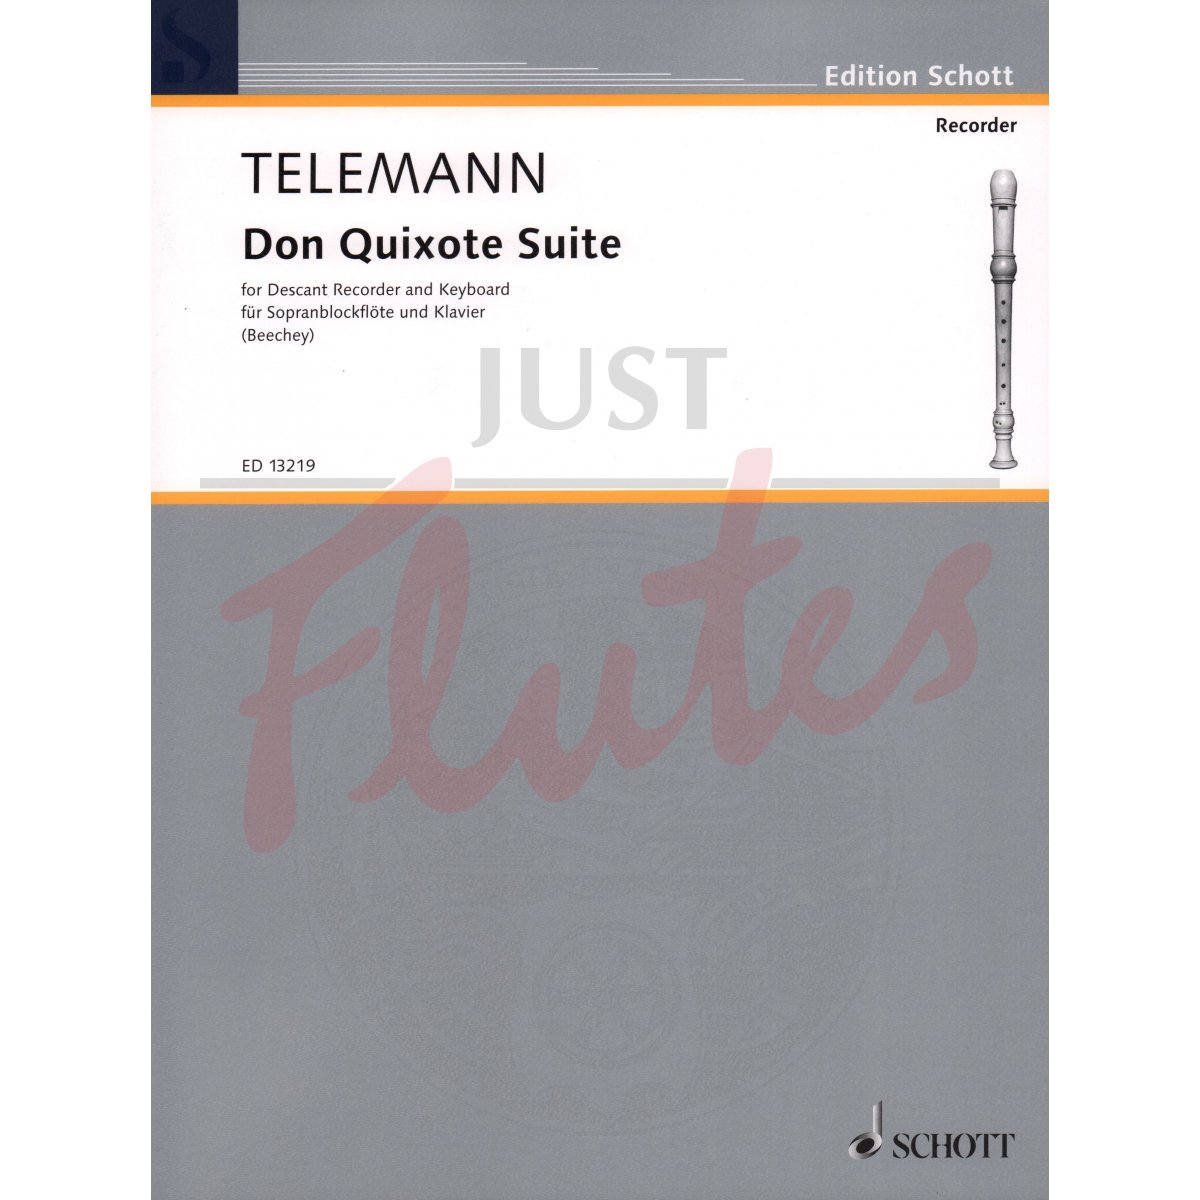 Don Quixote Suite for Descant Recorder and Piano